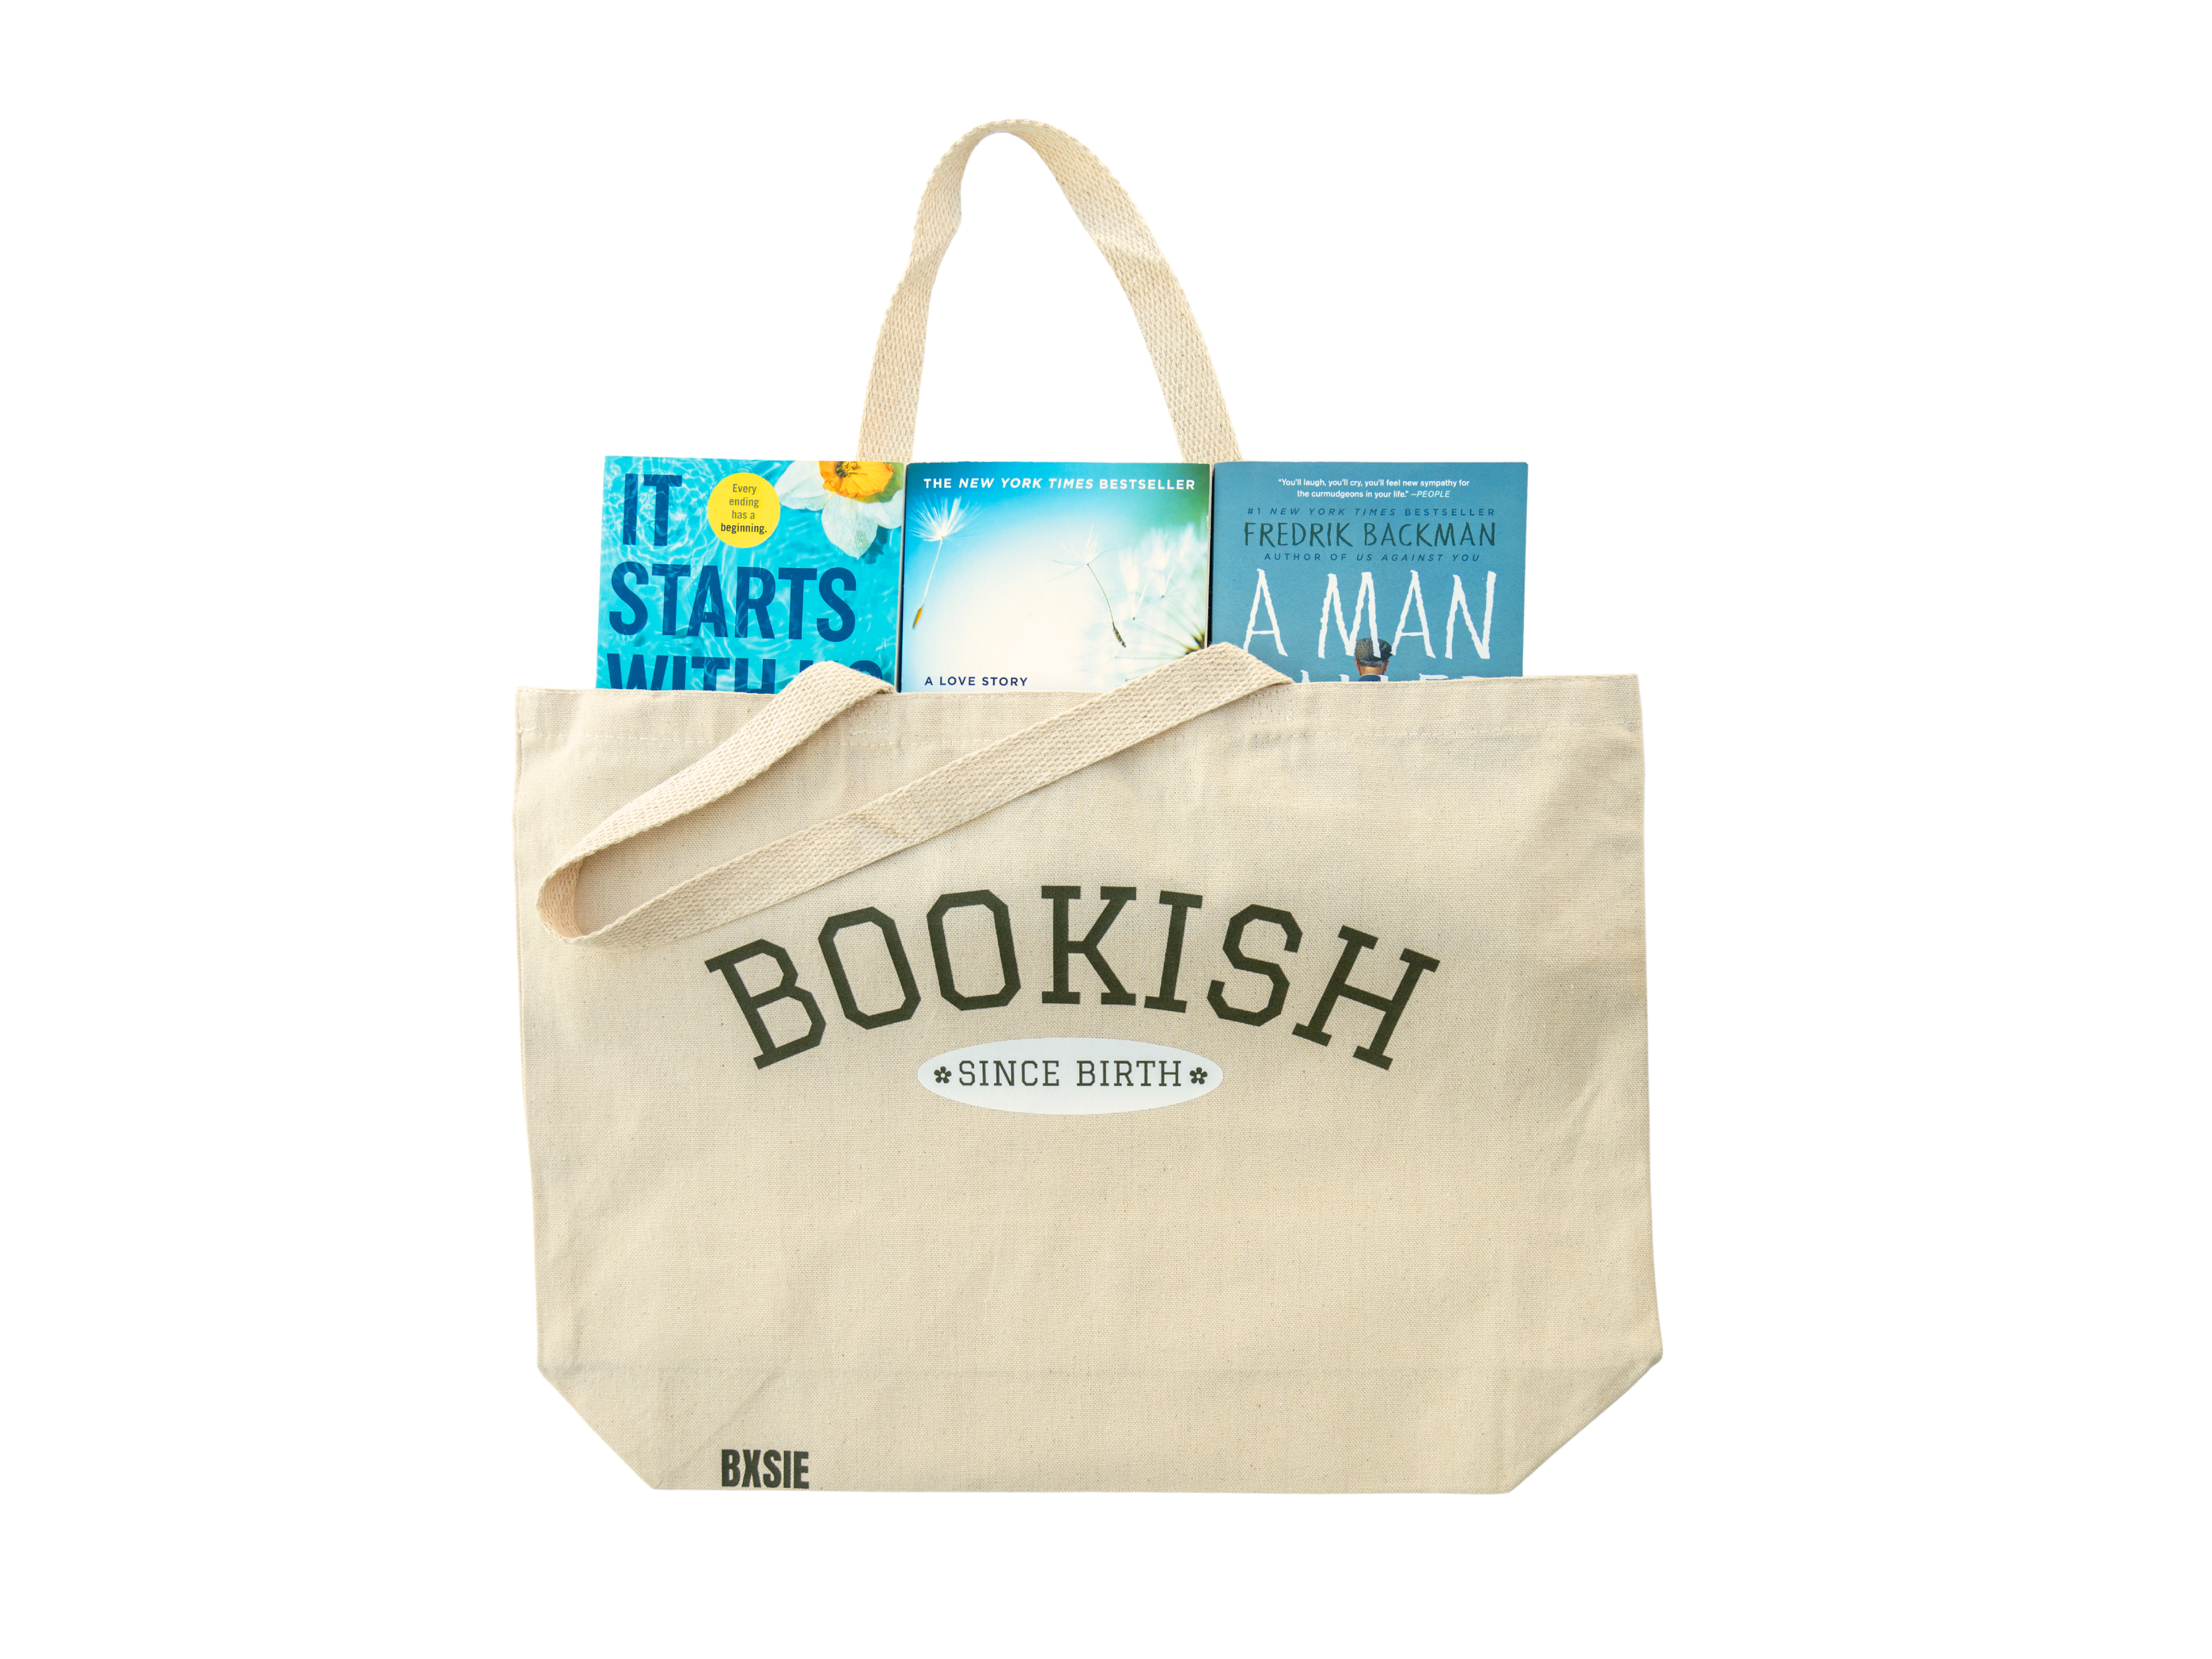 Book tote bag for books, BXSIE, cotton tote, front view